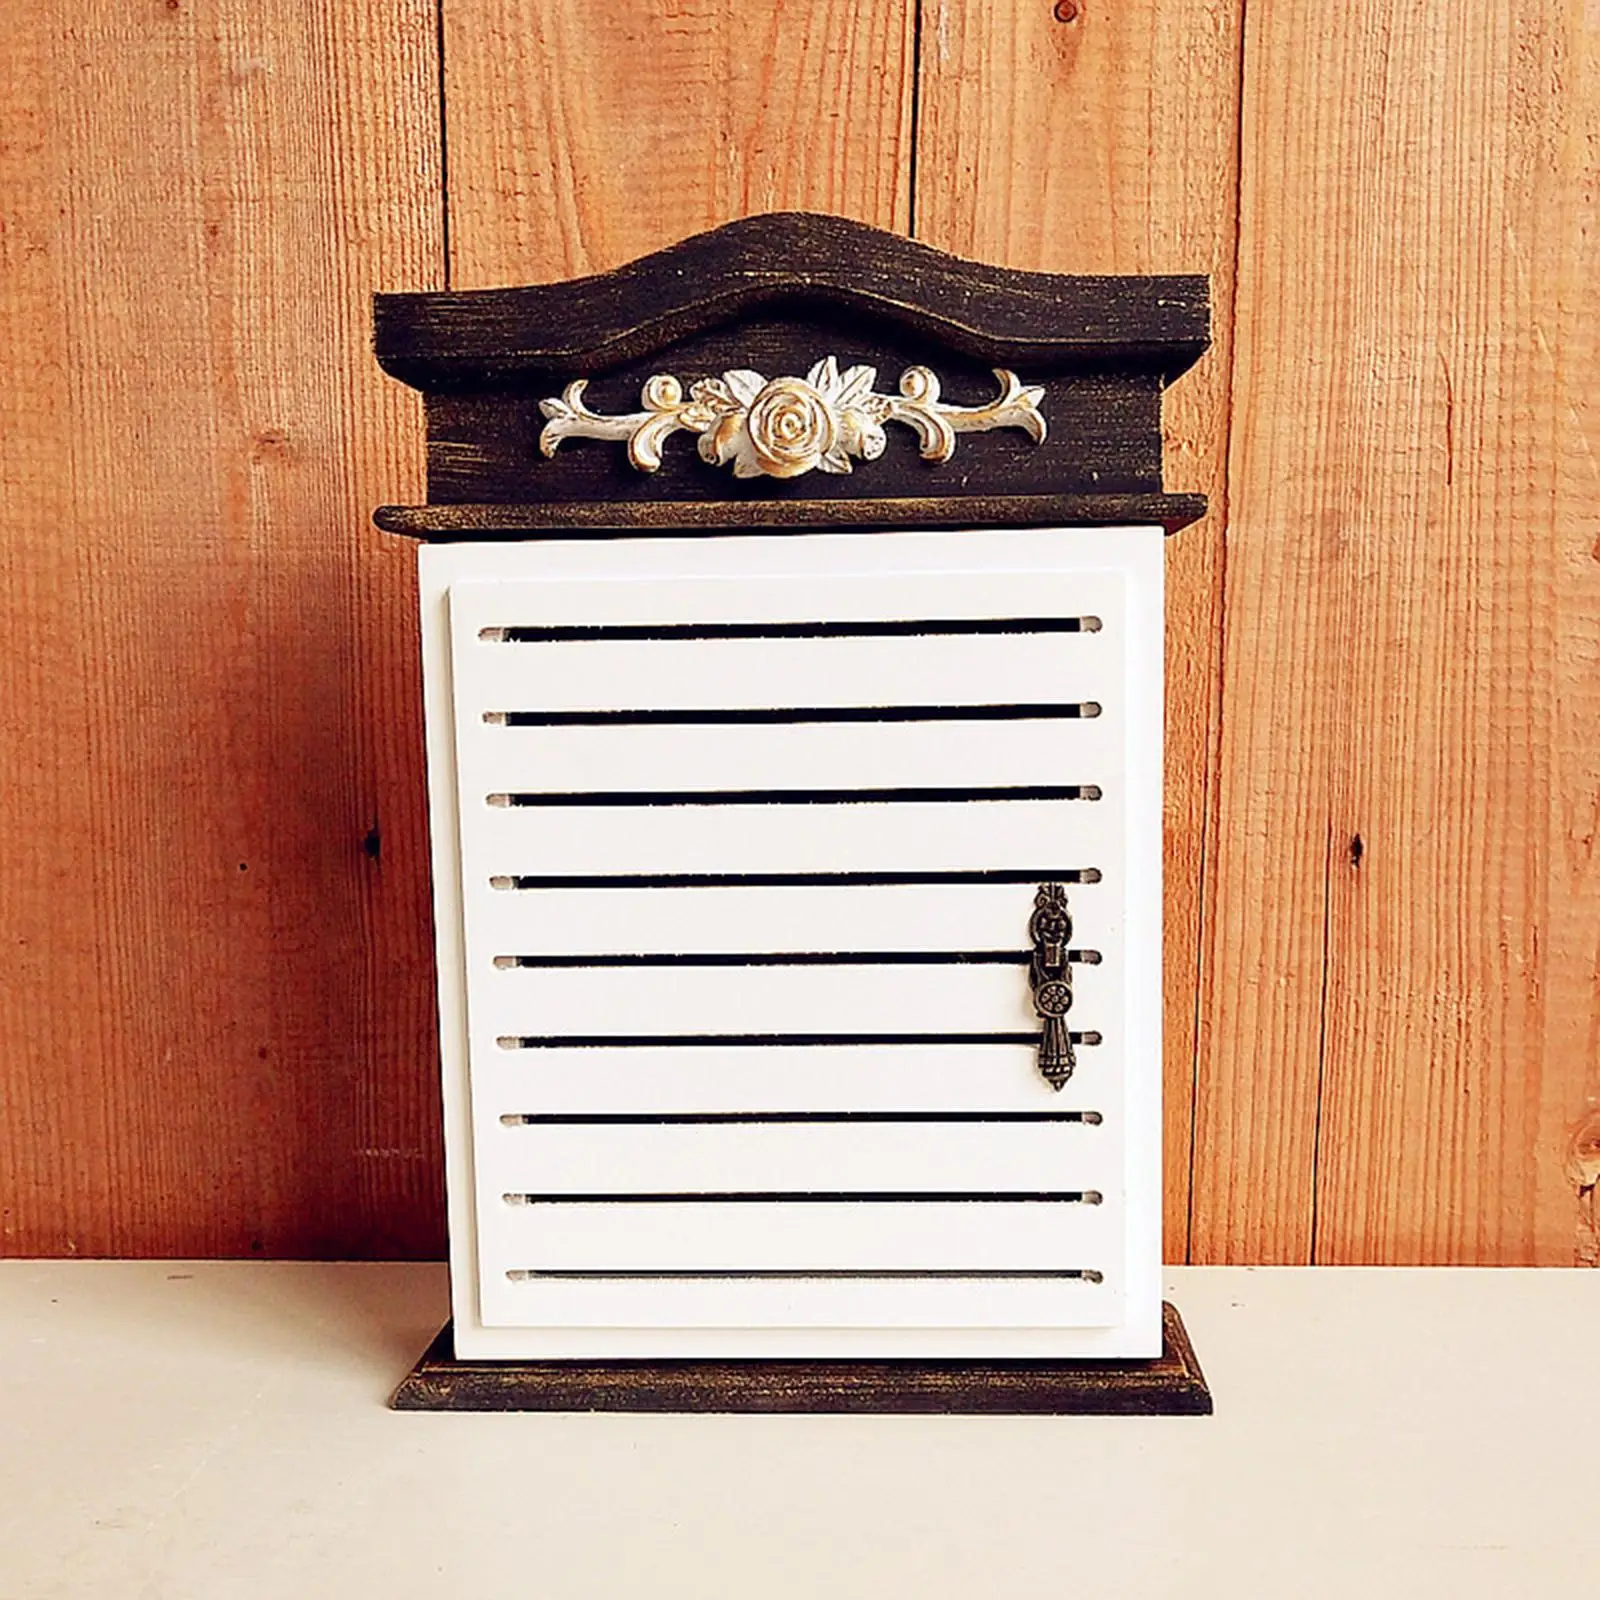 Key Storage Box Holder Vintage -Mounted Multi-Use Organizer Large Capacity Case for Home, Housewarming Gift Porch Desktop Decor